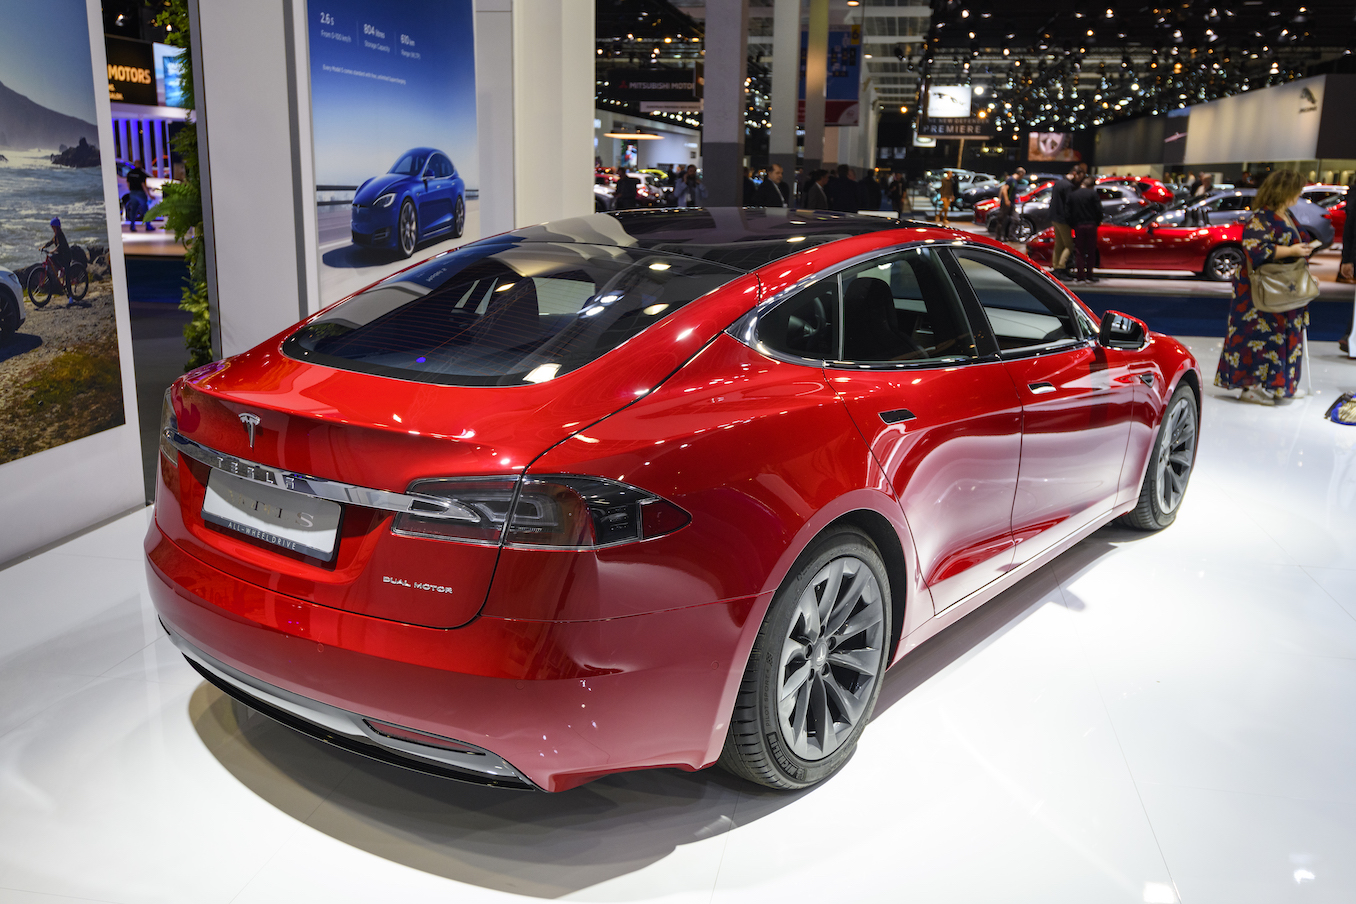 Tesla Model S dual motor all electric sedan on display at Brussels Expo